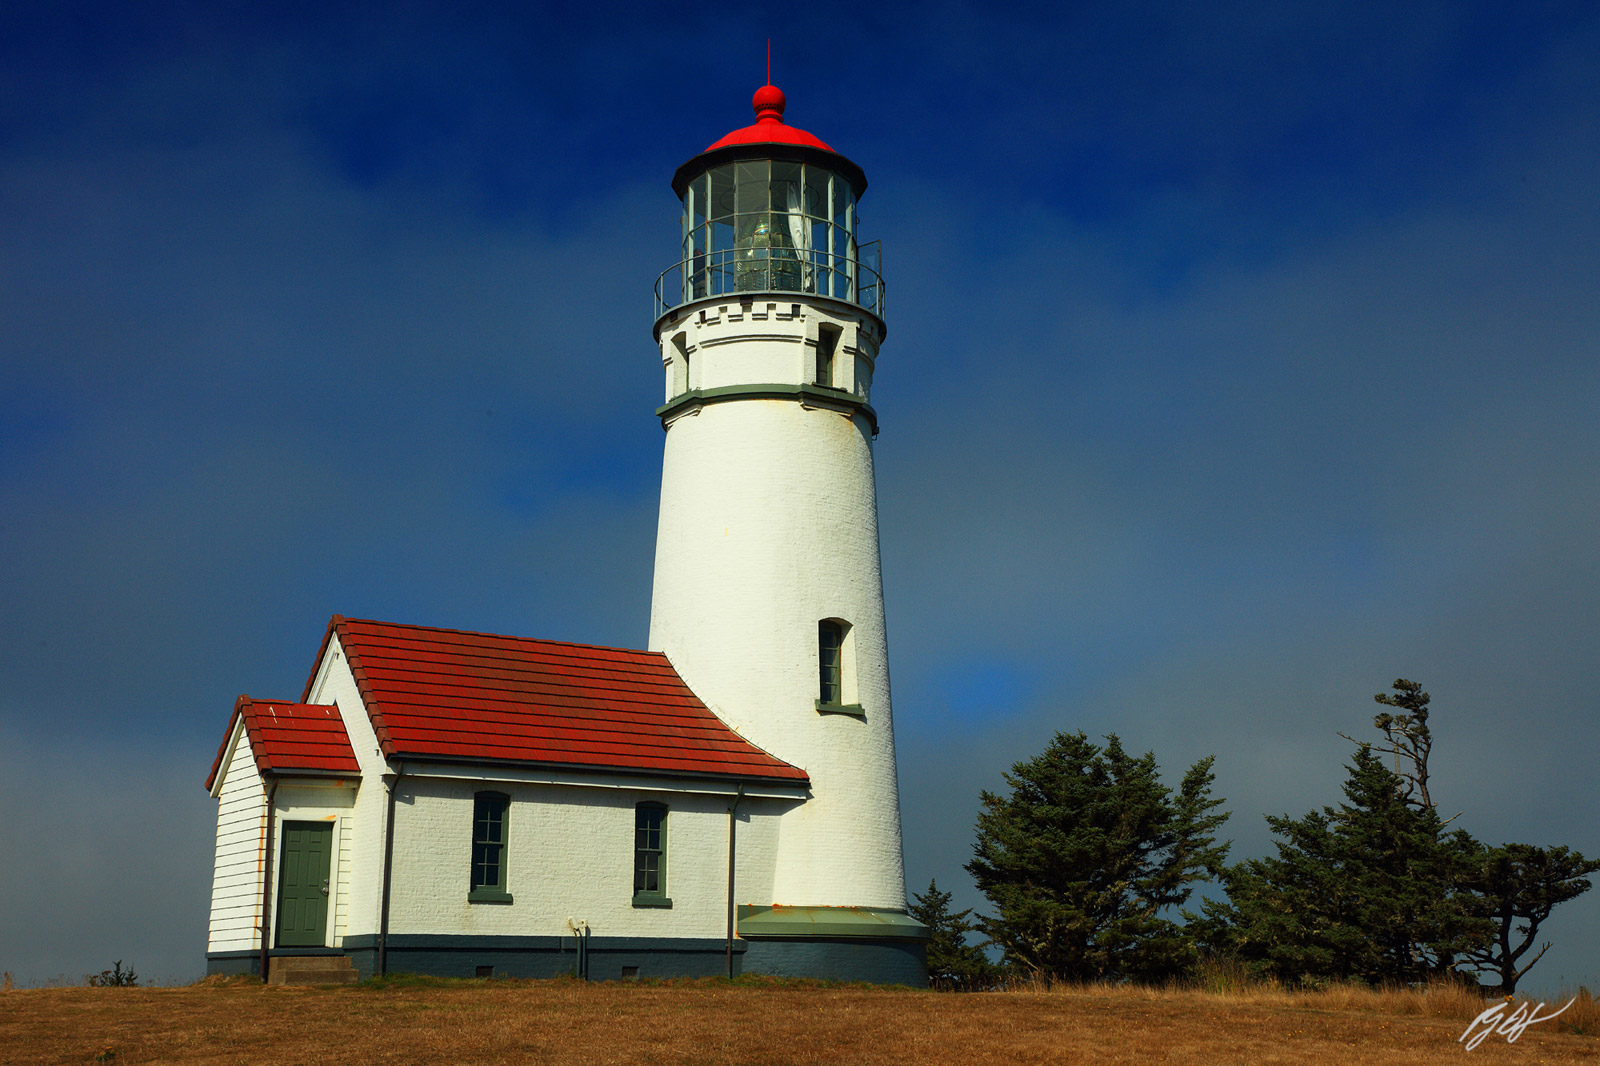 Cape Blanco Lighthouse in Cape Blanco Lighthouse State Park on the Oregon Coast